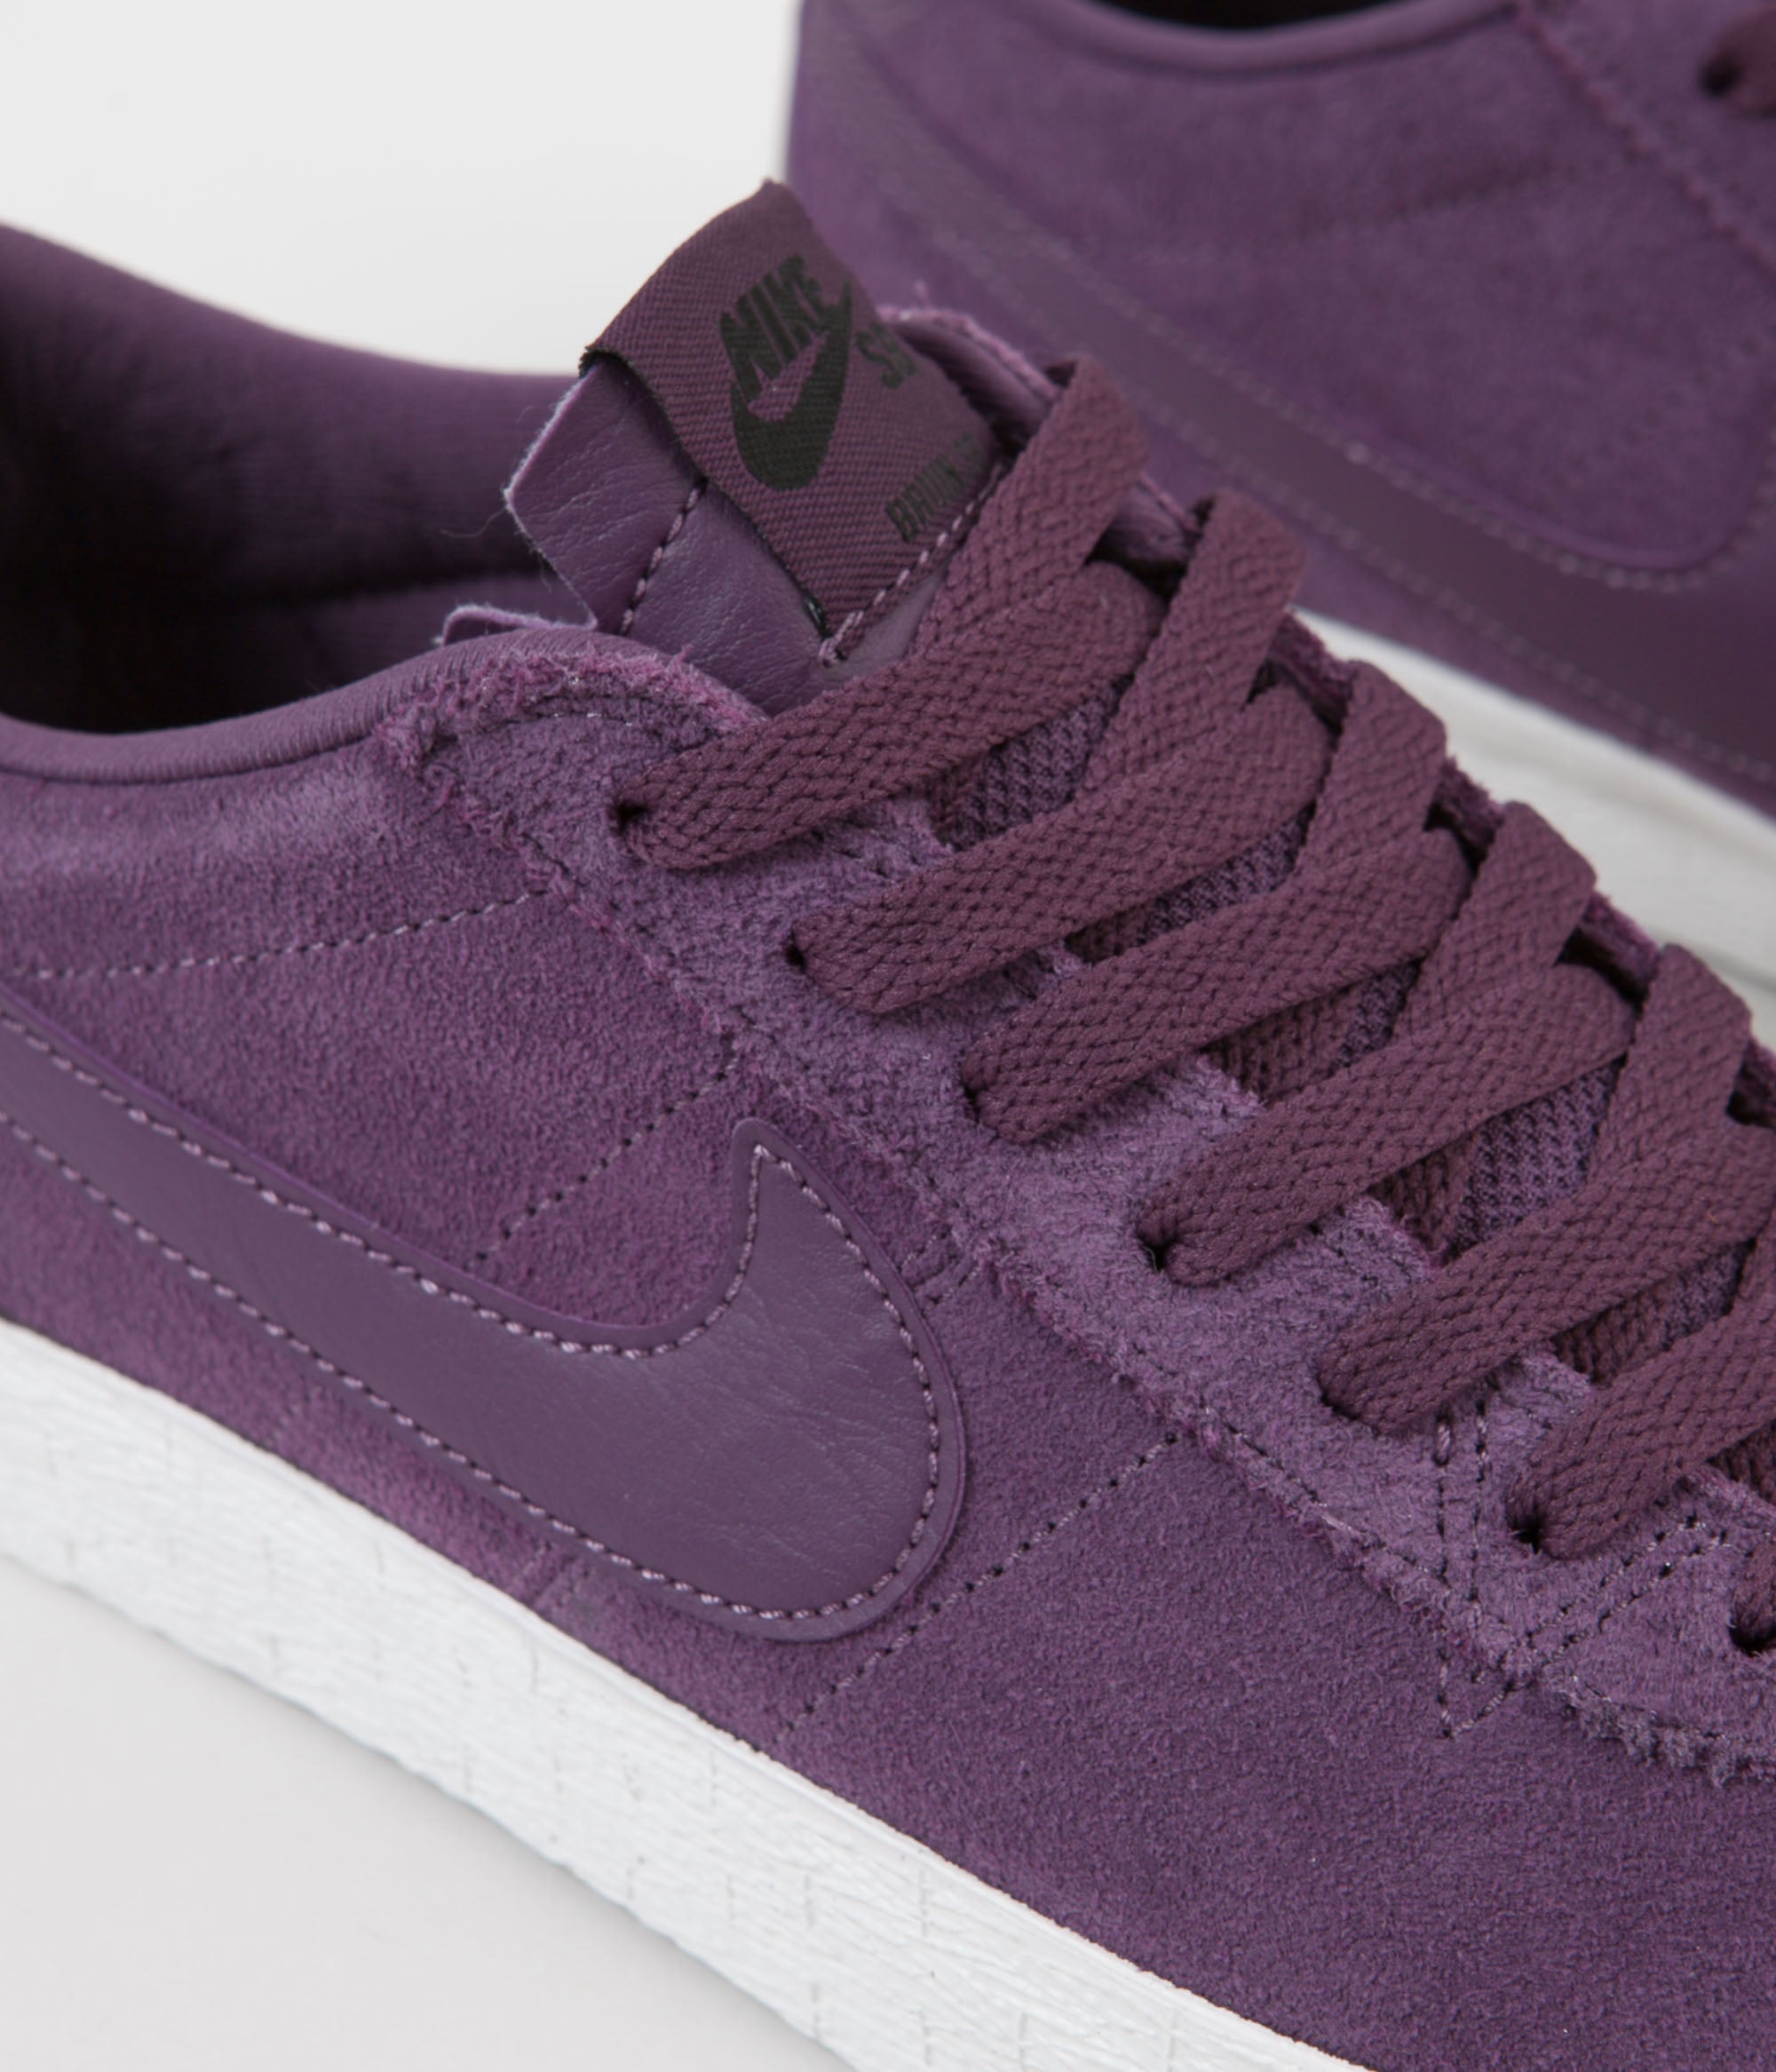 purple nike skate shoes